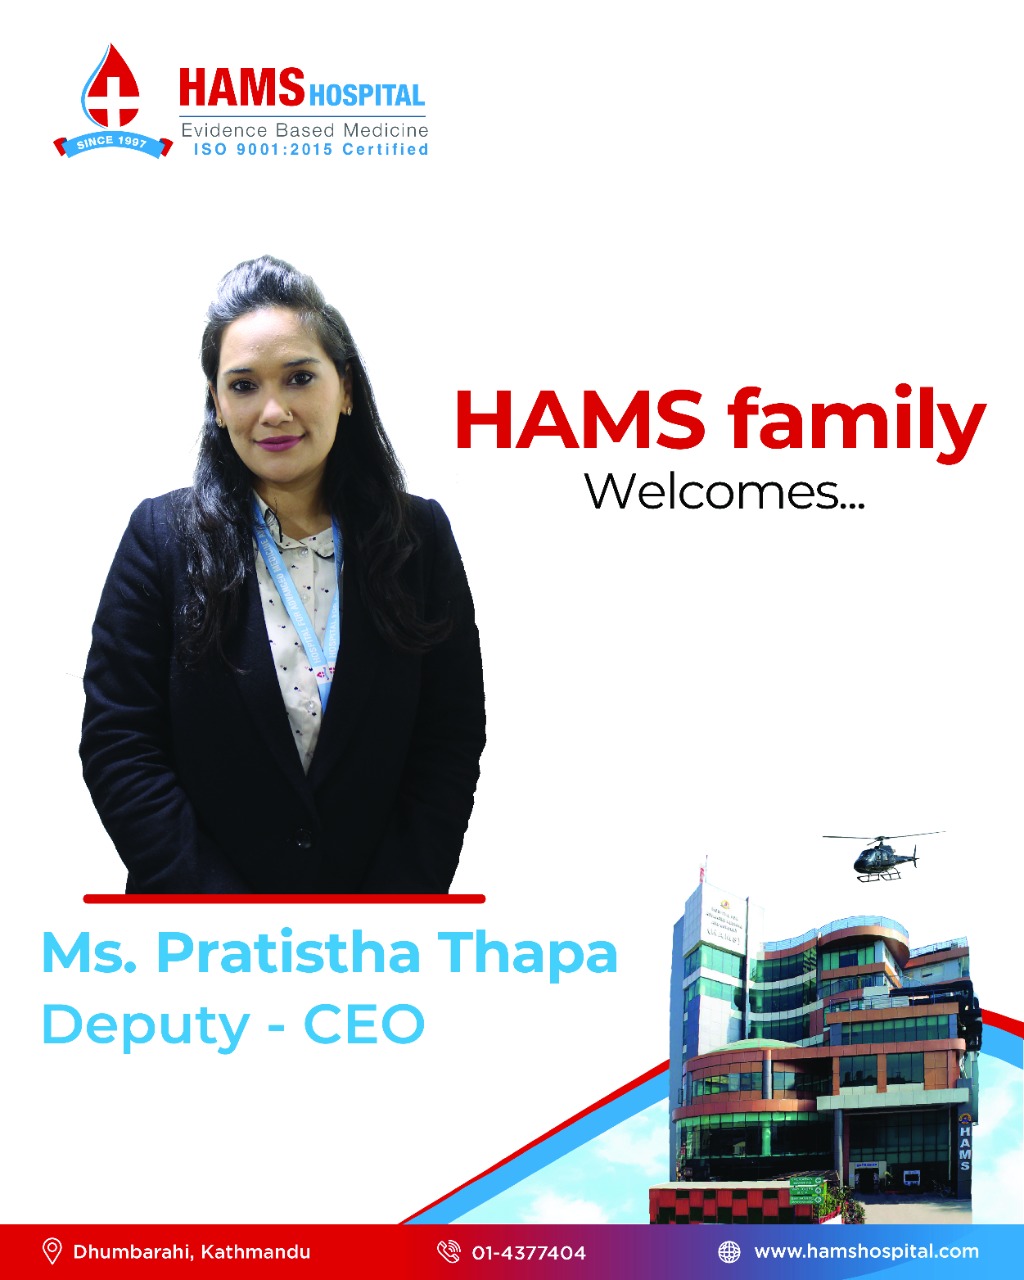 HAMS family welcomes Ms Pratistha Thapa